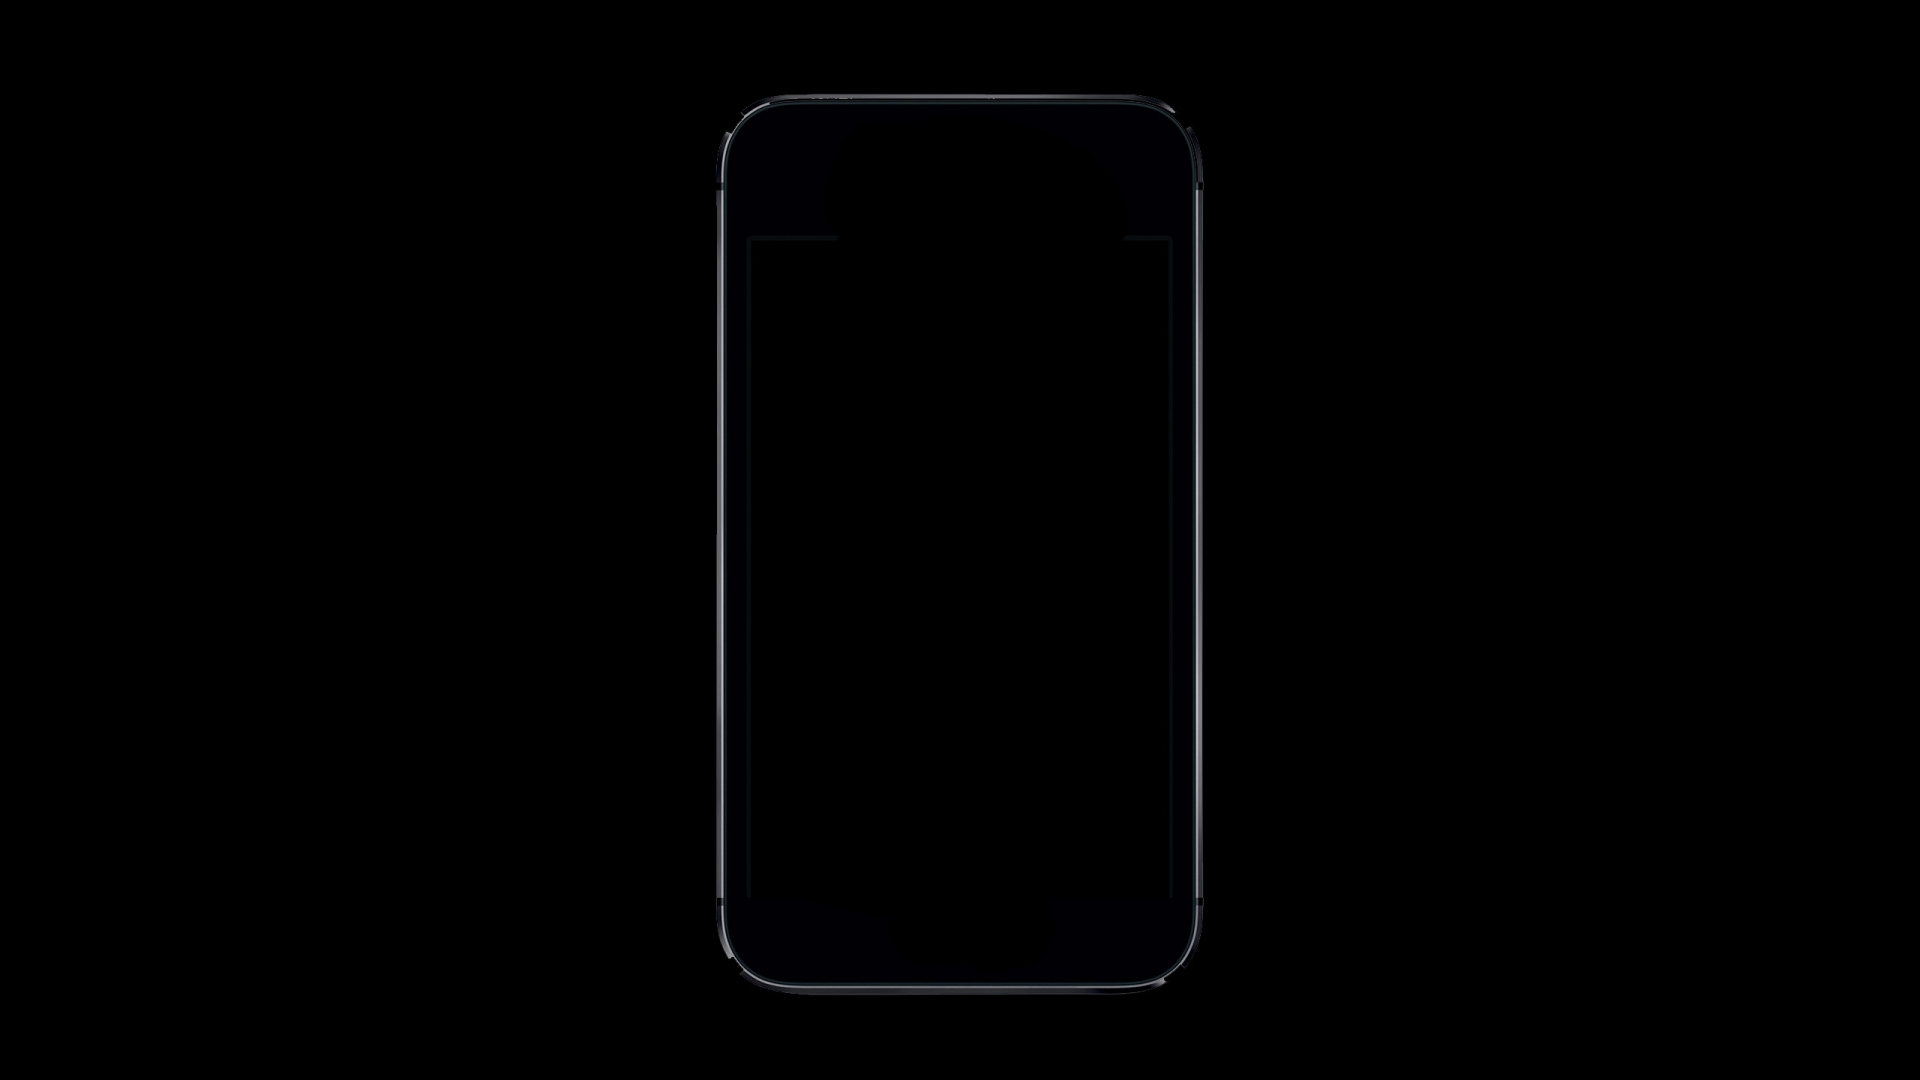 Foxconn กำลังพัฒนากรอบแก้วสำหรับสมาร์ทโฟน หรือนี่จะเป็นบอดี้ iPhone 7 ที่จะเป็นแก้วทั้งเครื่อง !?